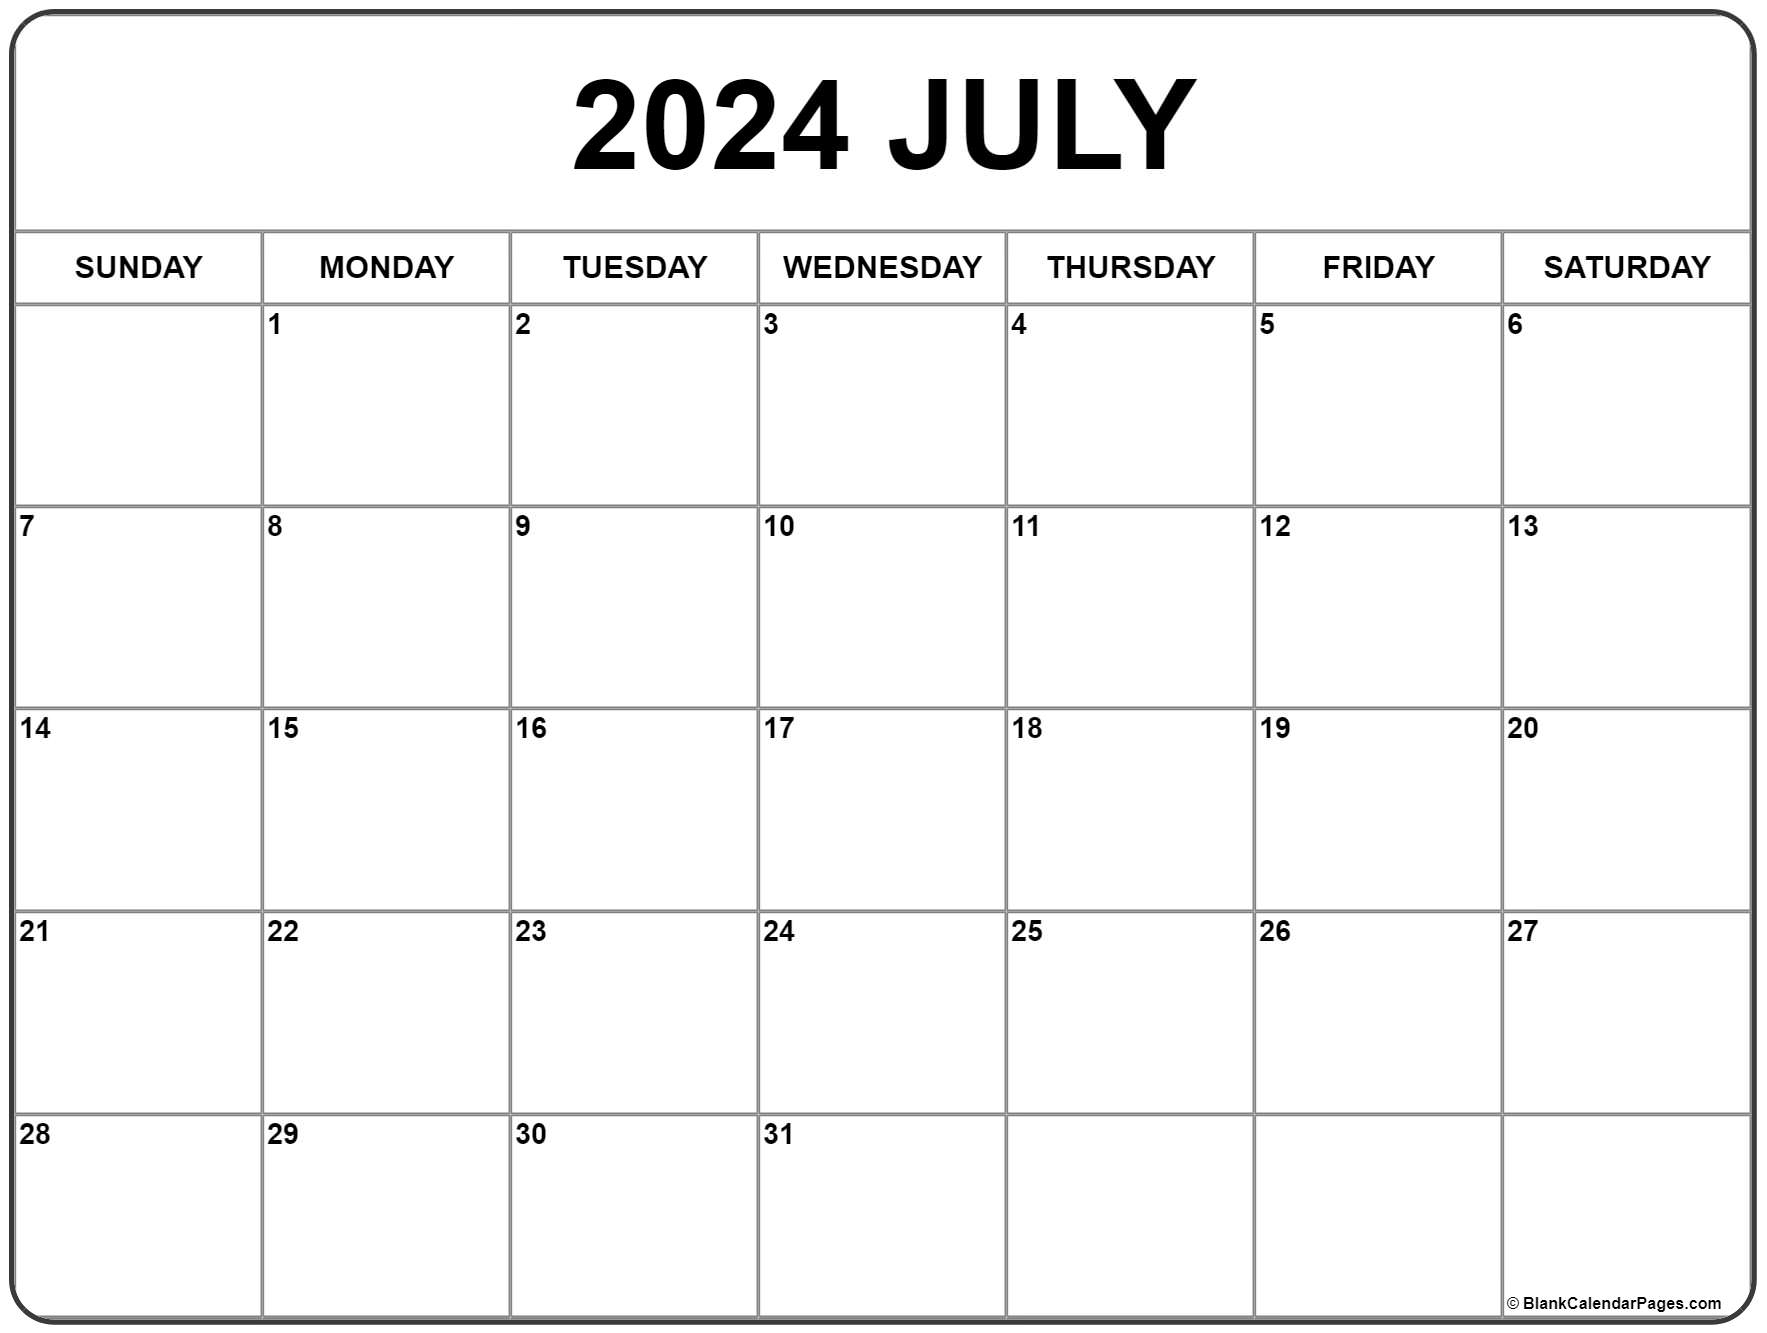 July 2022 Schedule July 2022 Calendar | Free Printable Calendar Templates